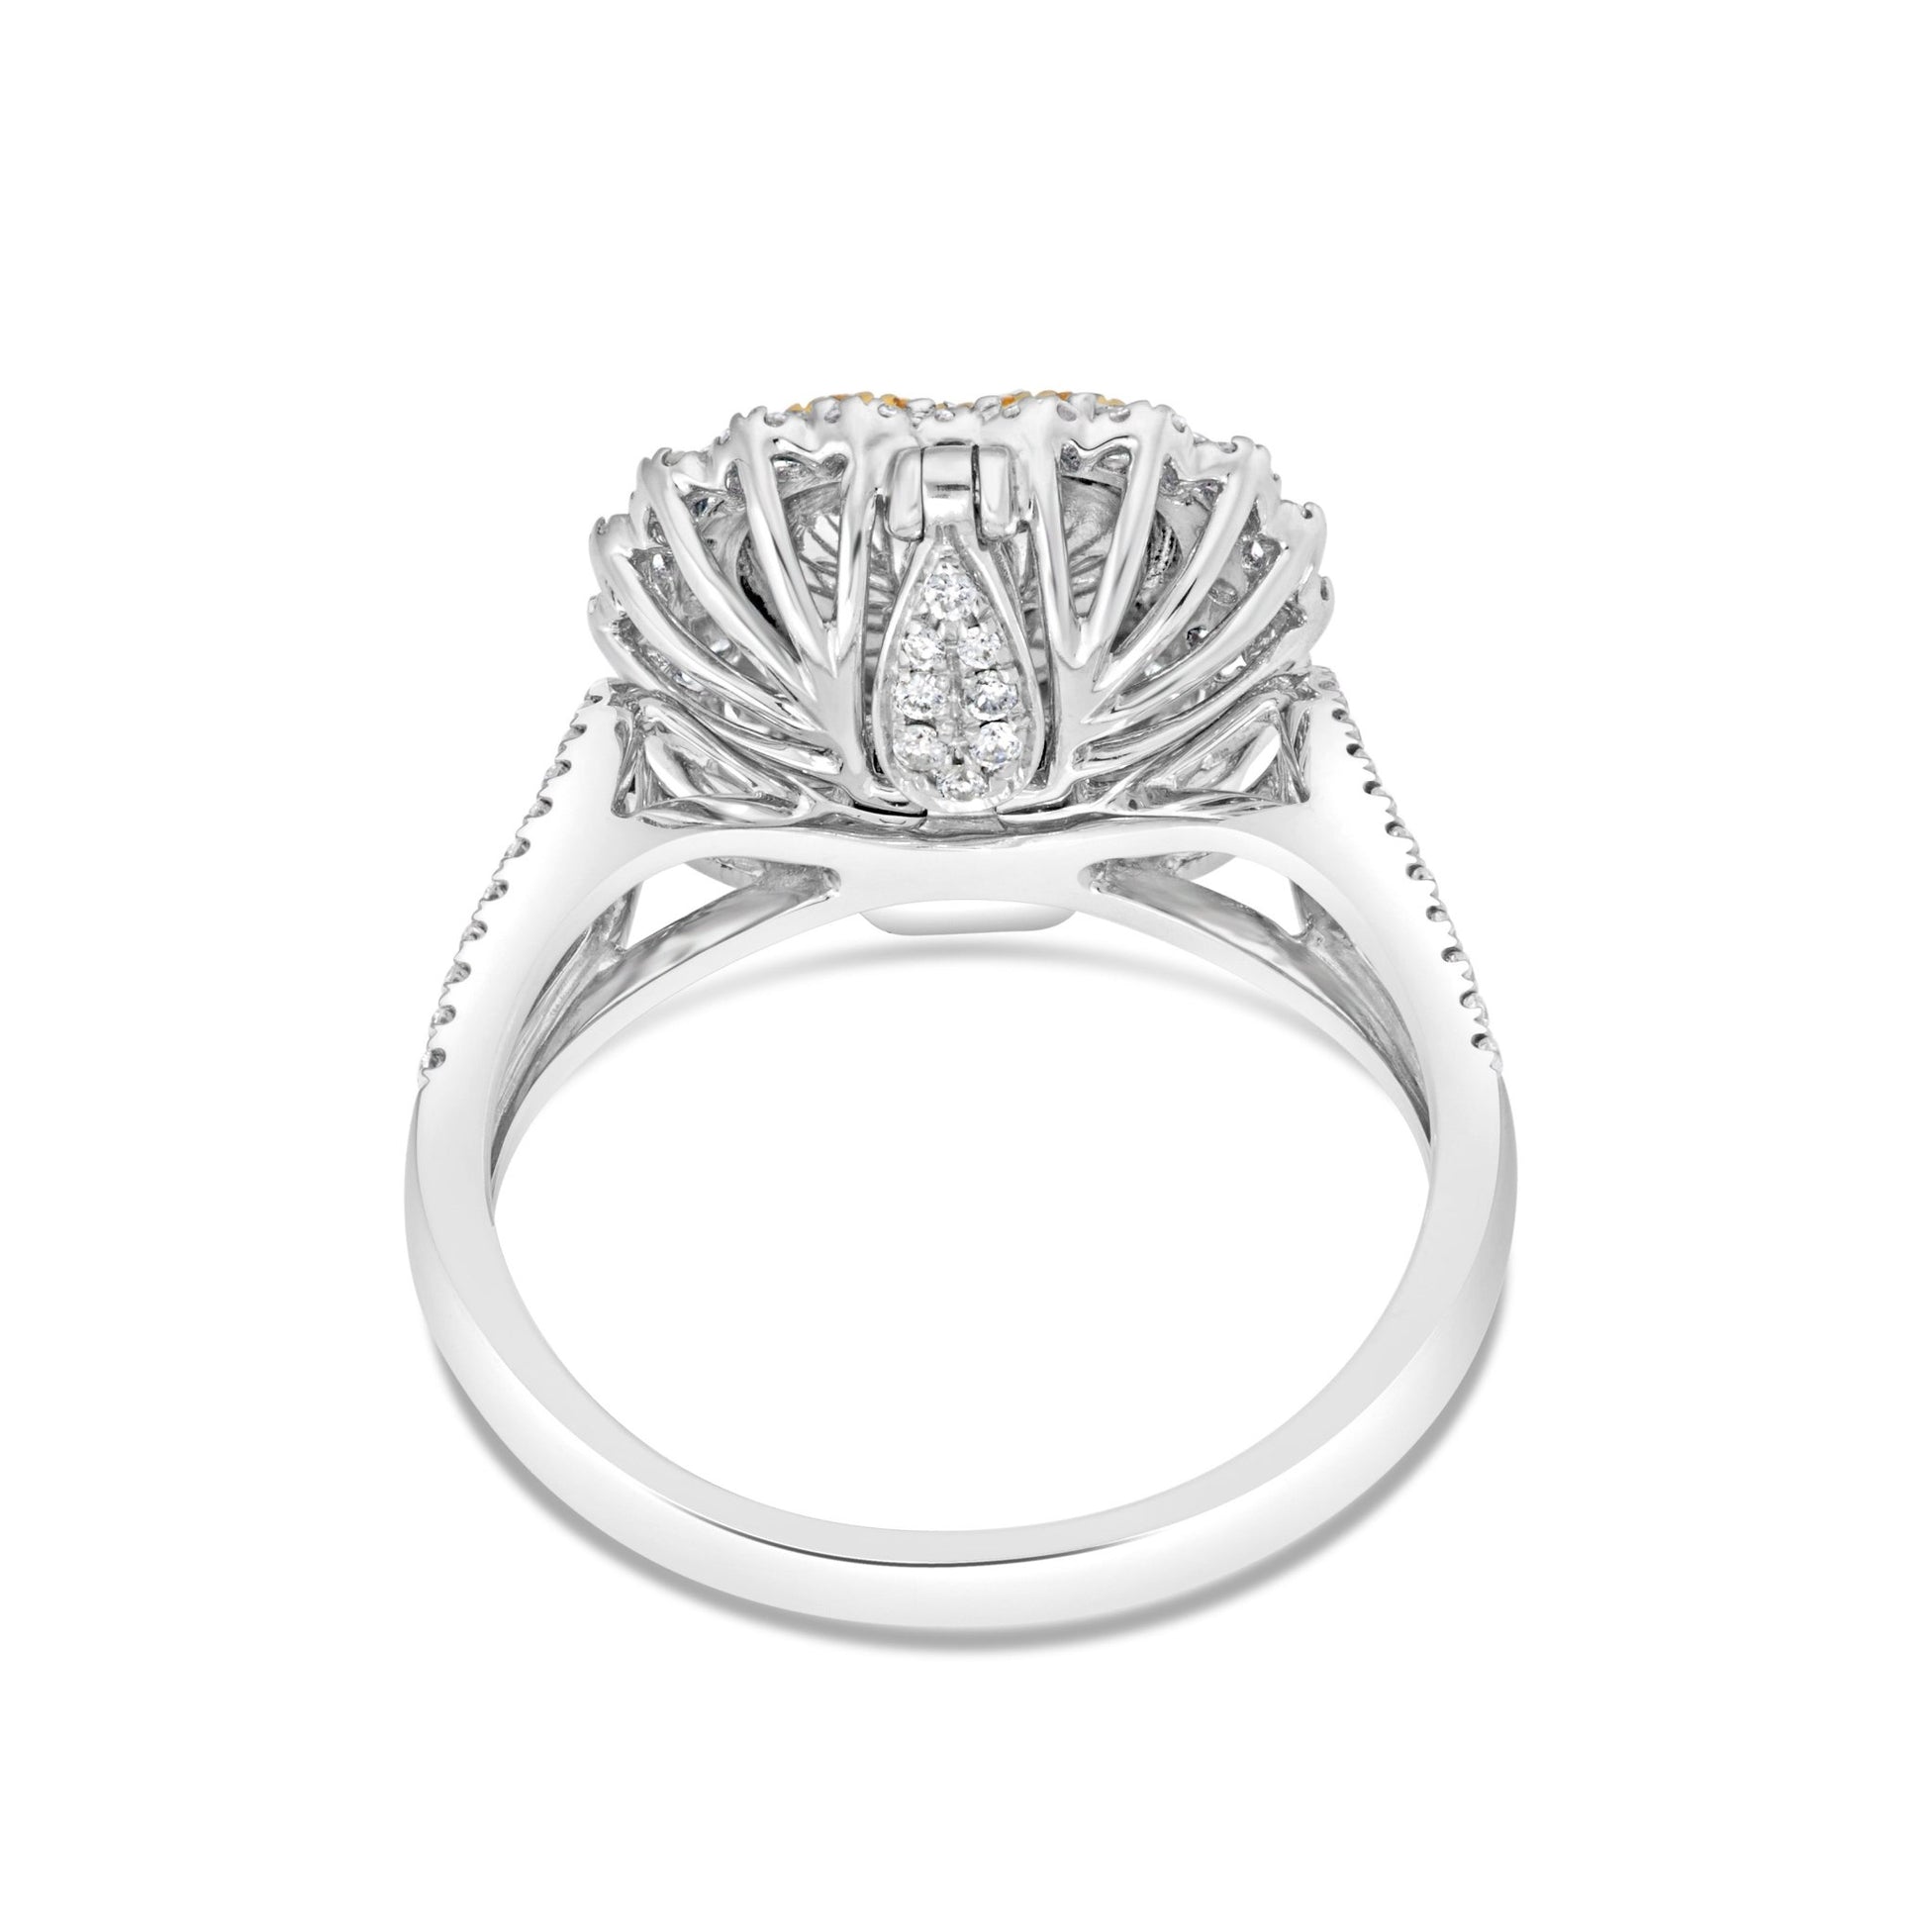 Yellow Diamond Heart Halo Engagement Ring - Shyne Jewelers 4 Shyne Jewelers